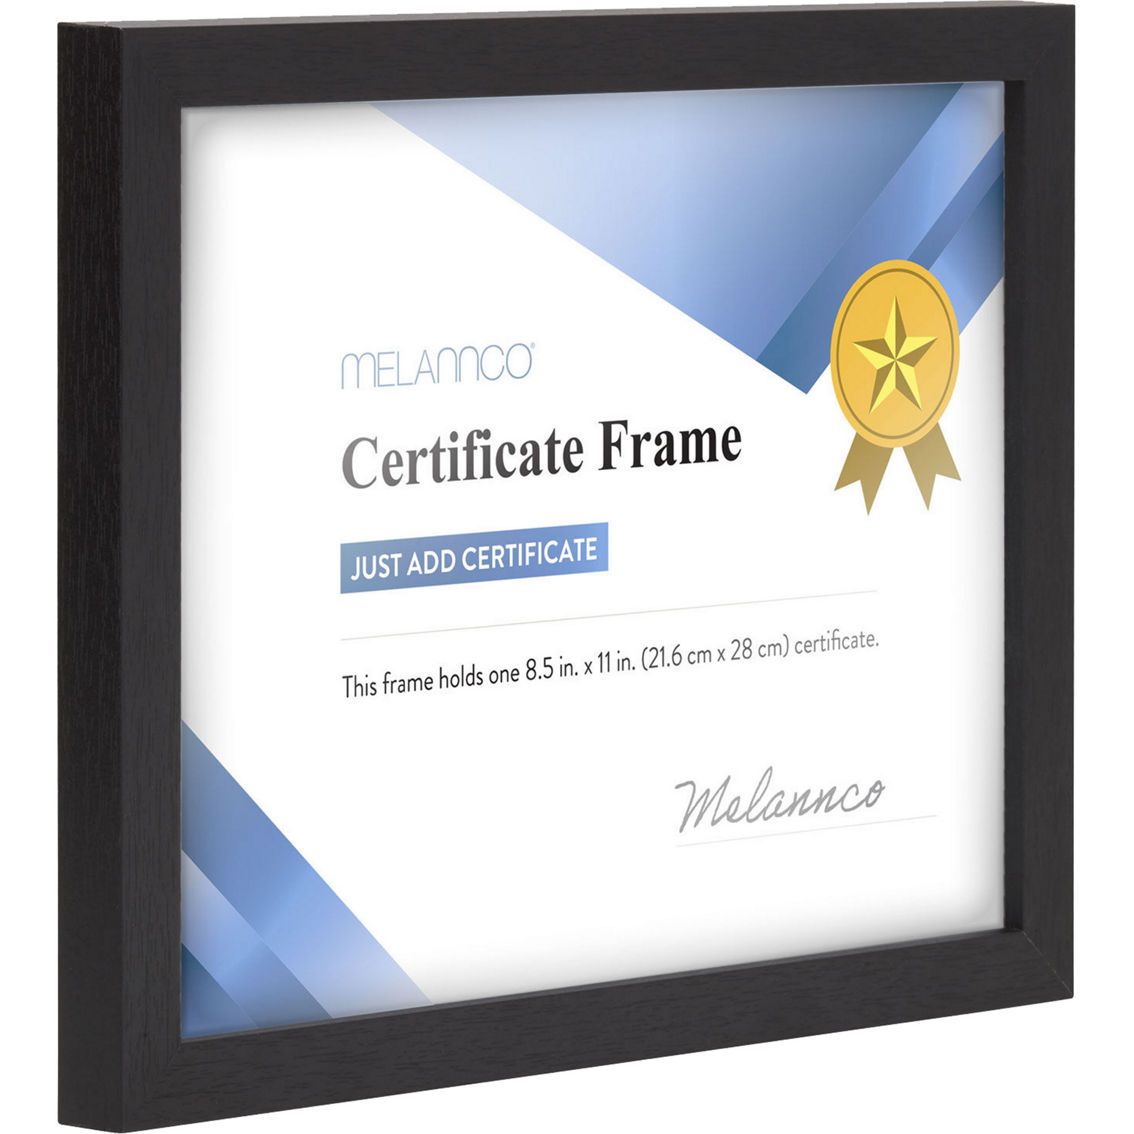 Melannco 8 x10 in. Black Wood Certificate Frame - Image 2 of 4